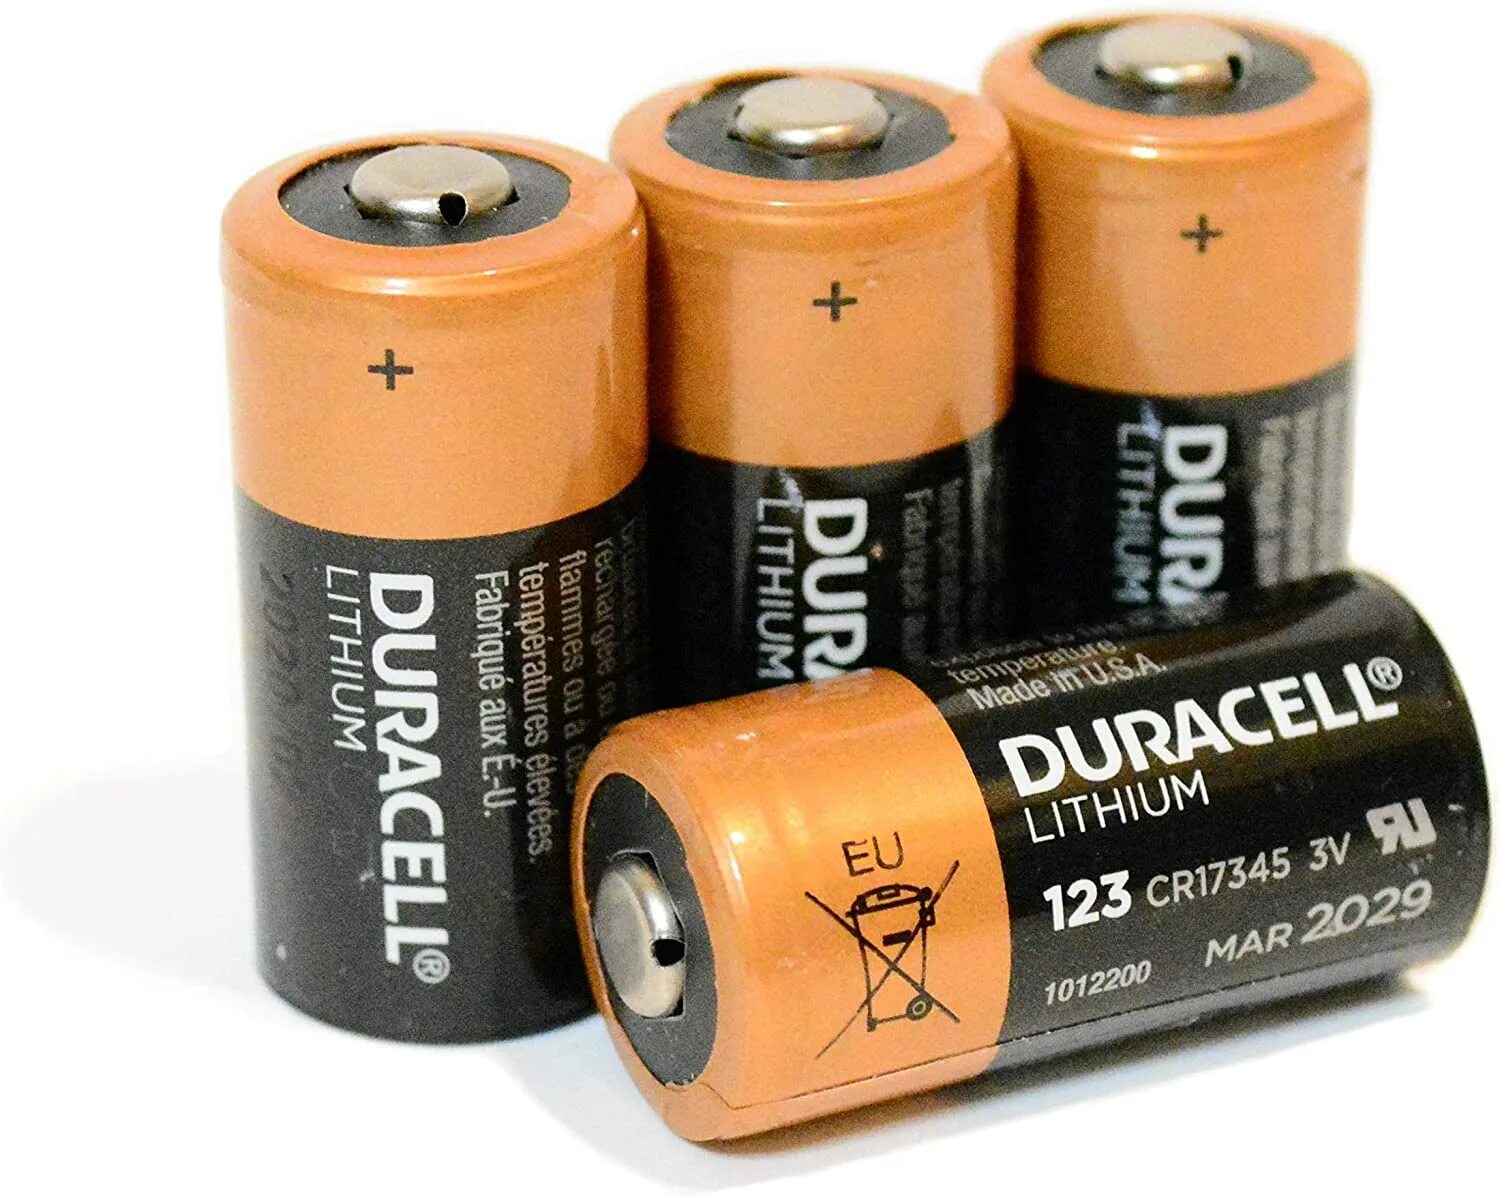 Cr123a батарейка купить. Батарейка Duracell cr123 Lithium 3v. Duracell Ultra cr123a. Duracell Ultra cr123, Lithium. Батарейка cr123 Duracell dl123a/el123a/cr17345 Lithium 3.0v 123106.